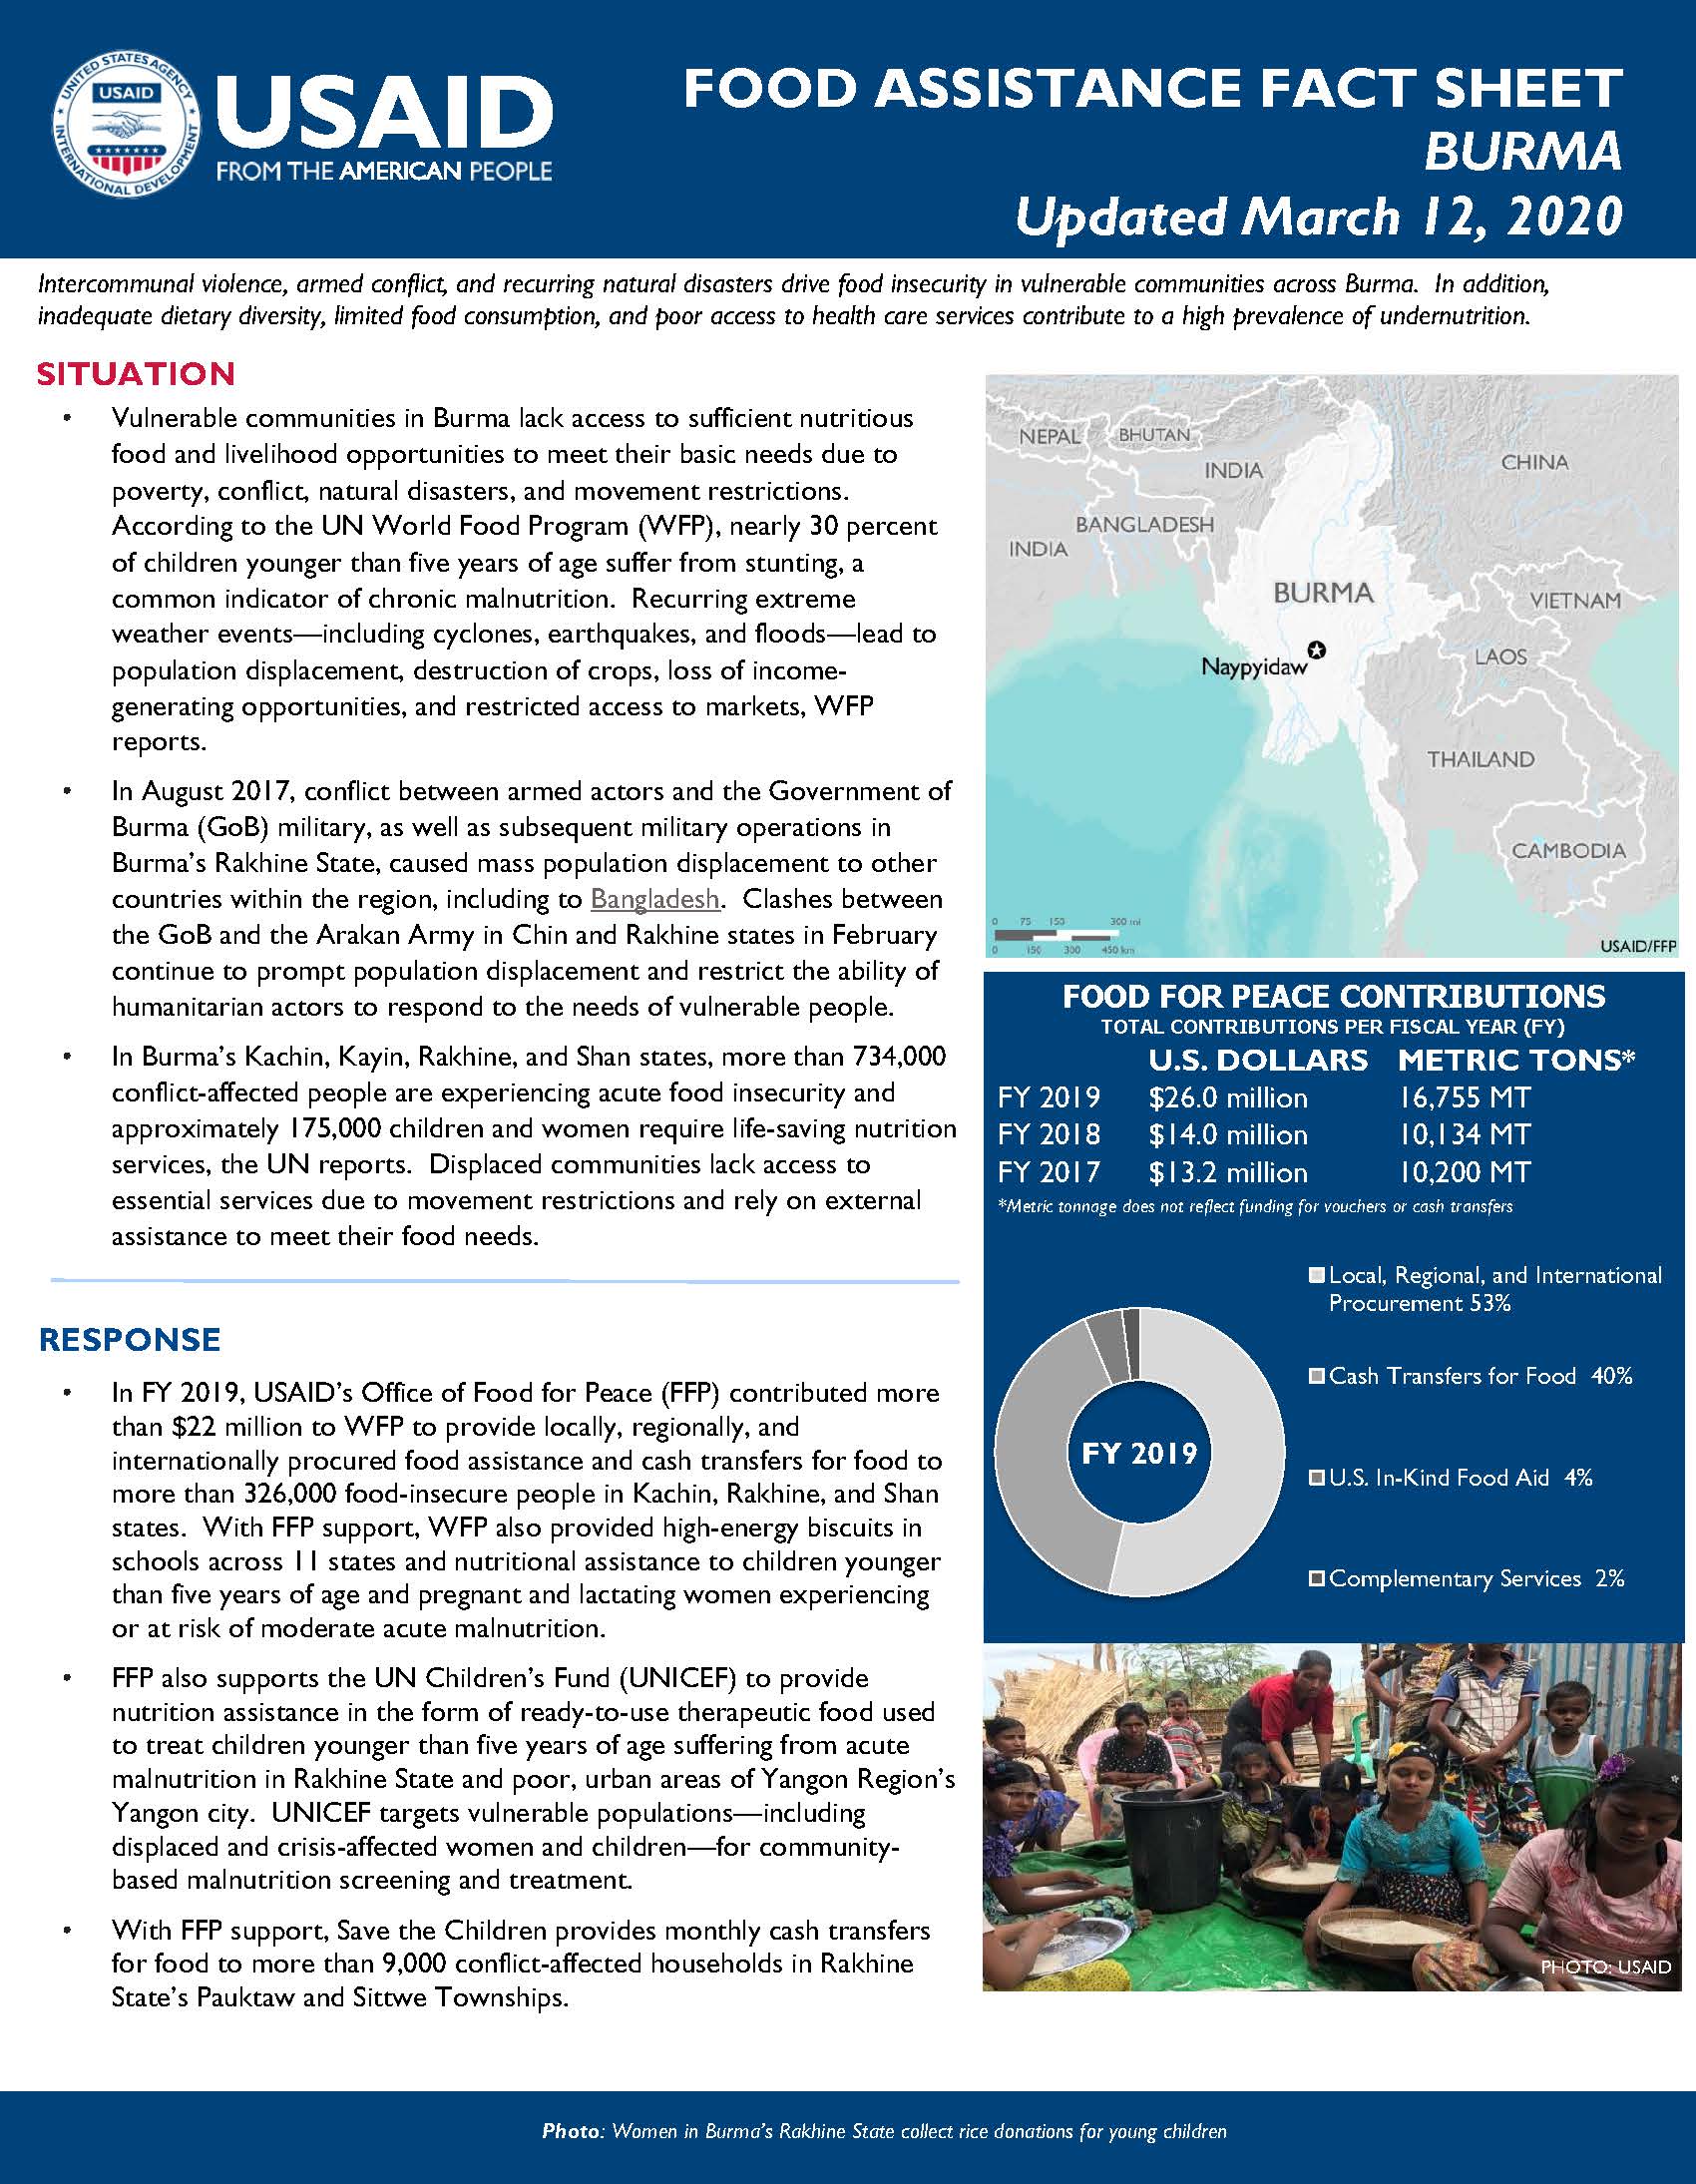 USAID Food Assistance Fact Sheet - Burma